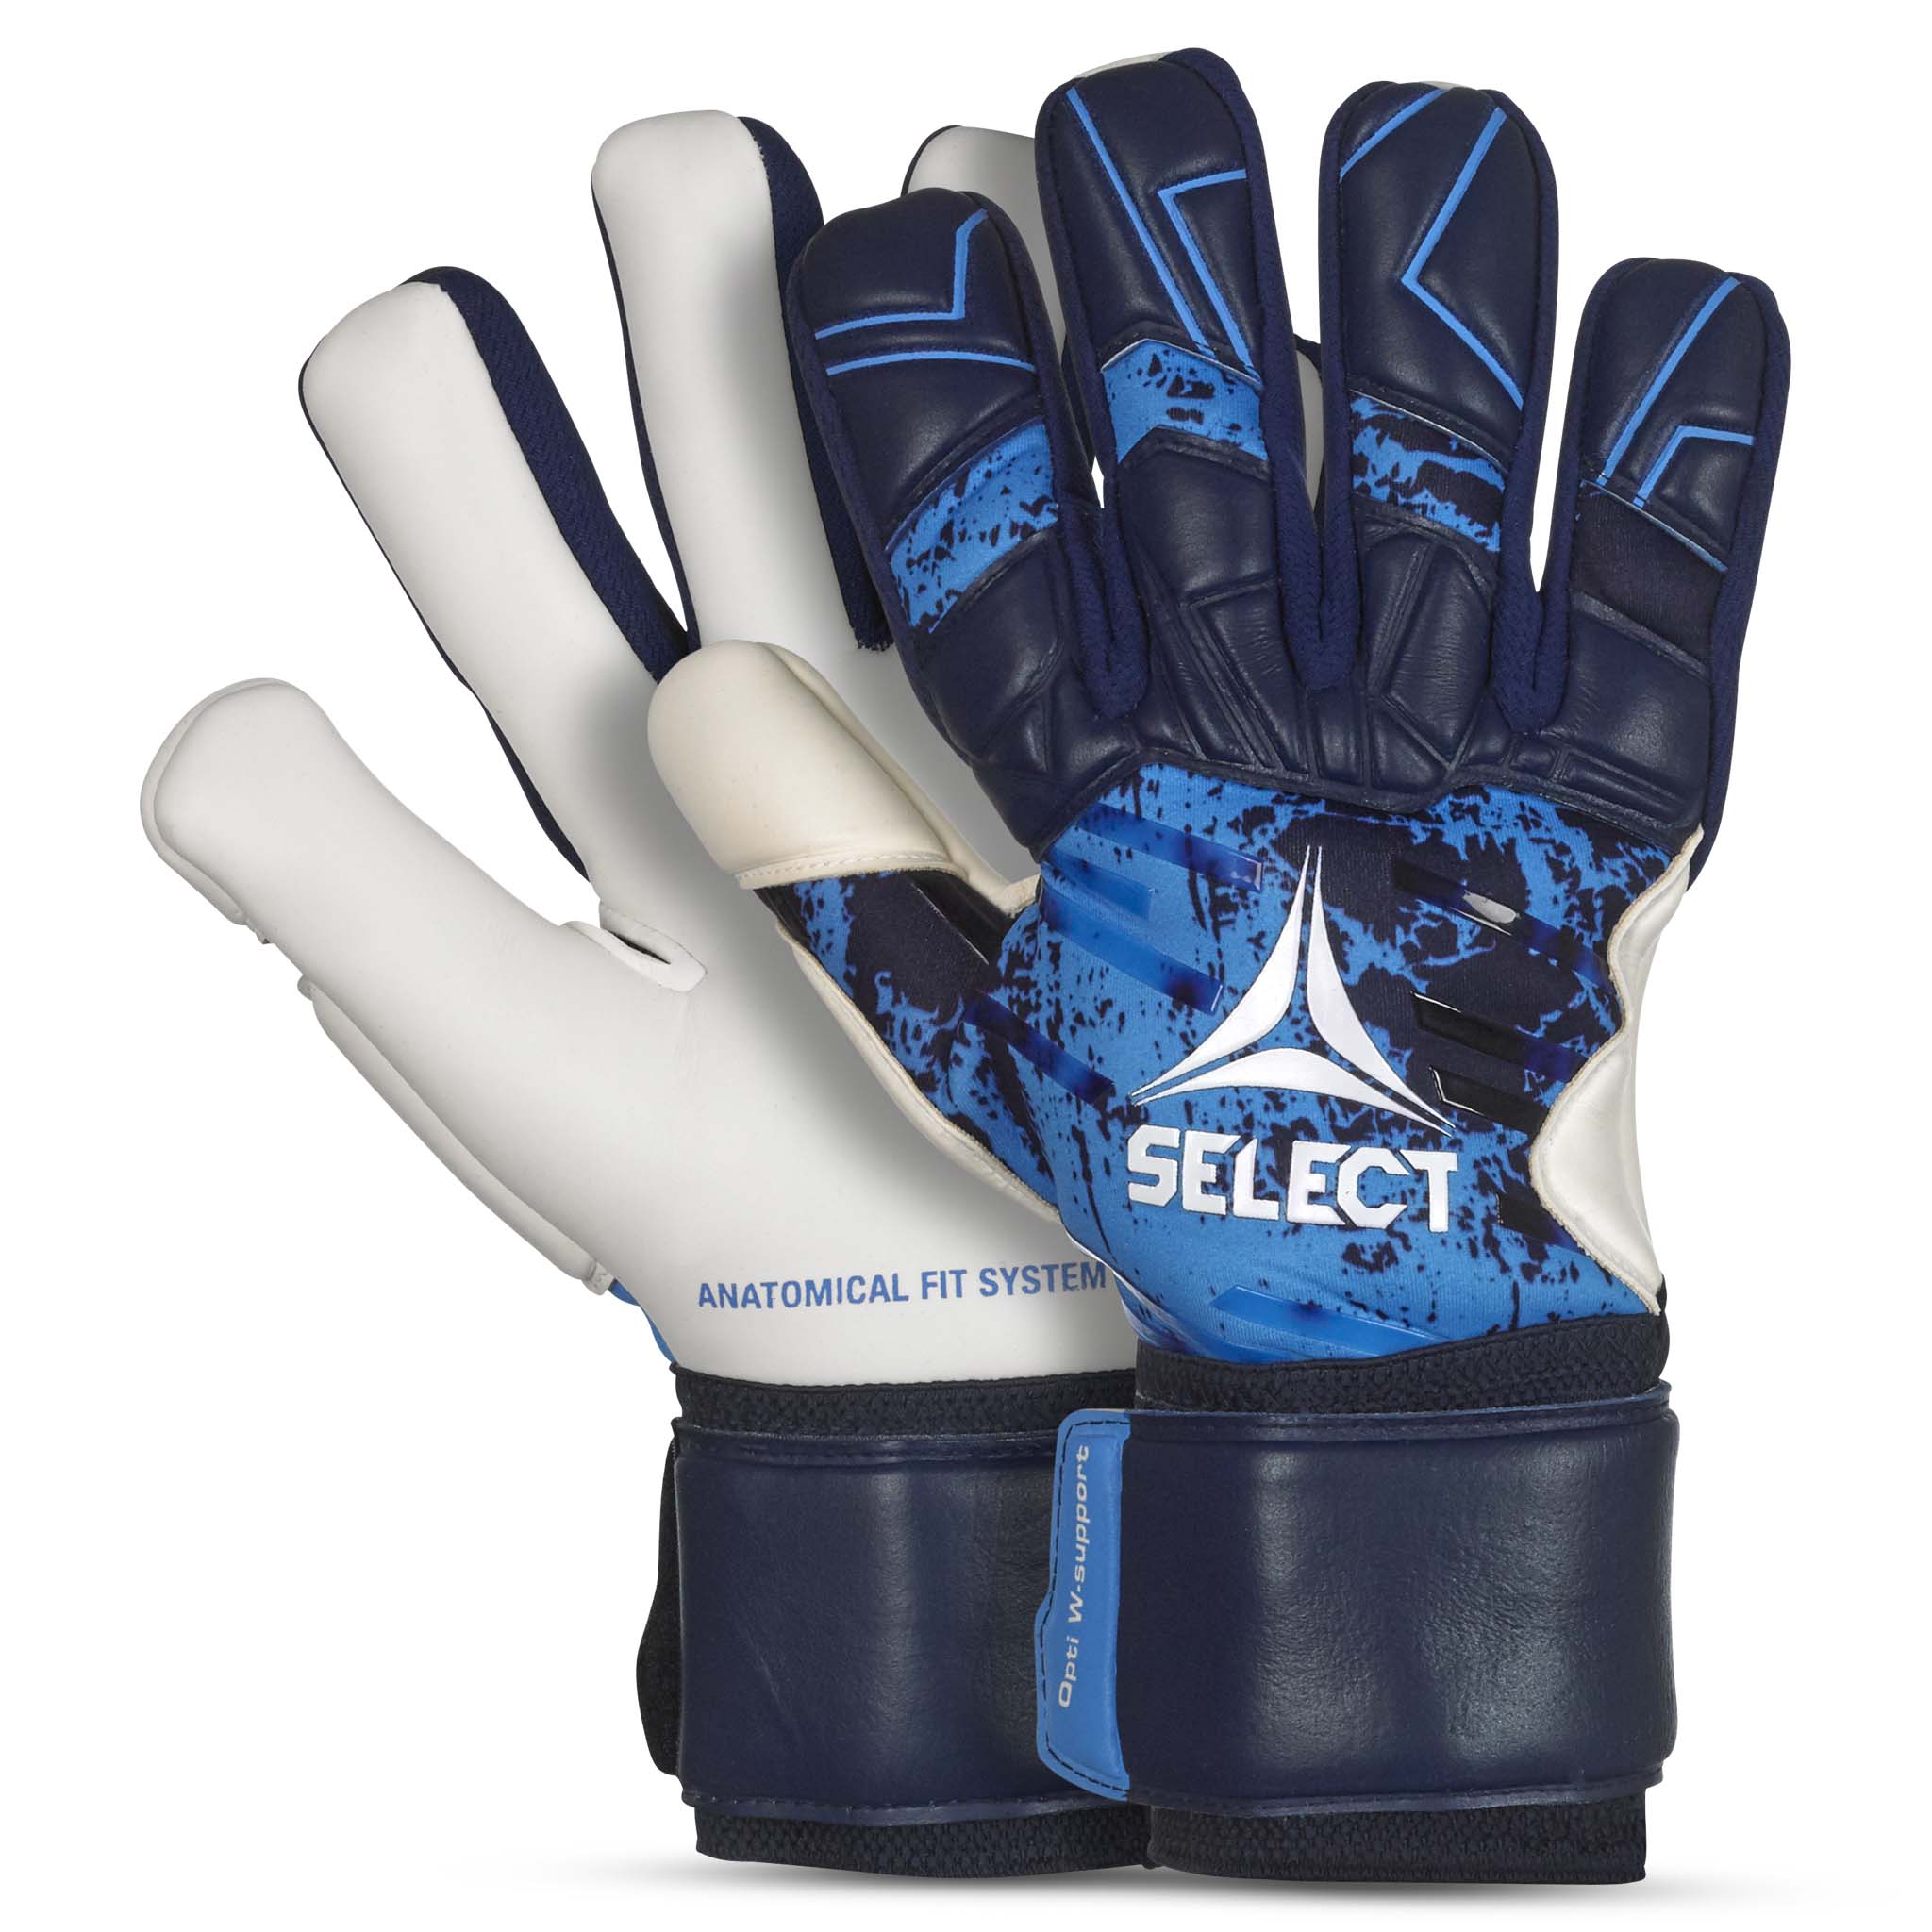 Goalkeeper gloves - 77 Super Grip